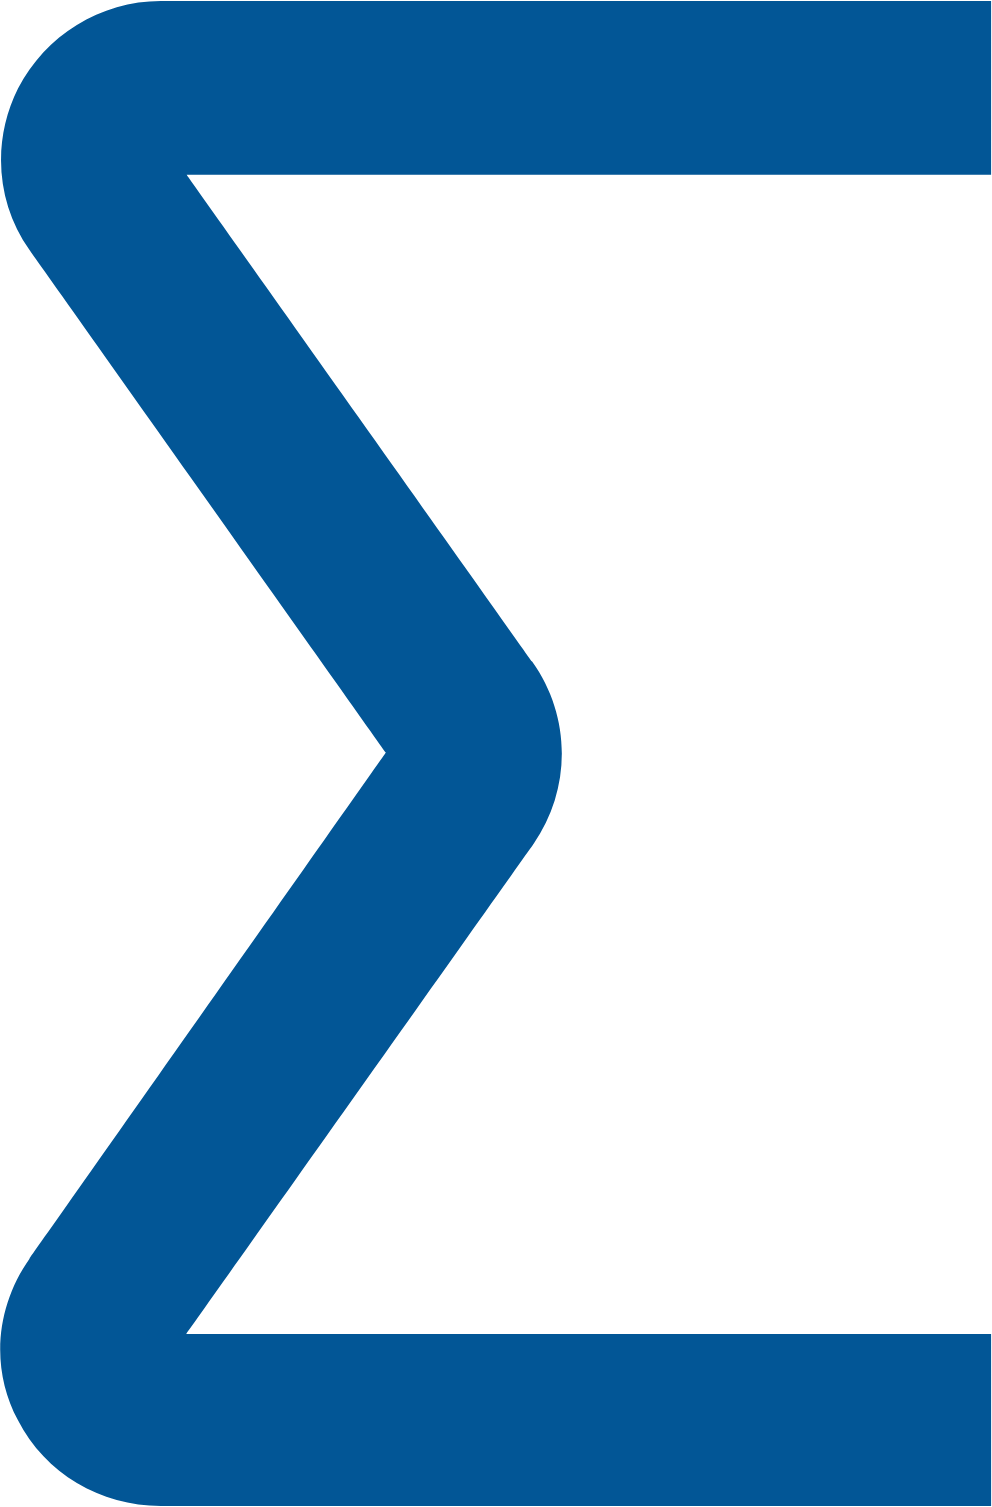 Sellas Life Sciences logo (transparent PNG)